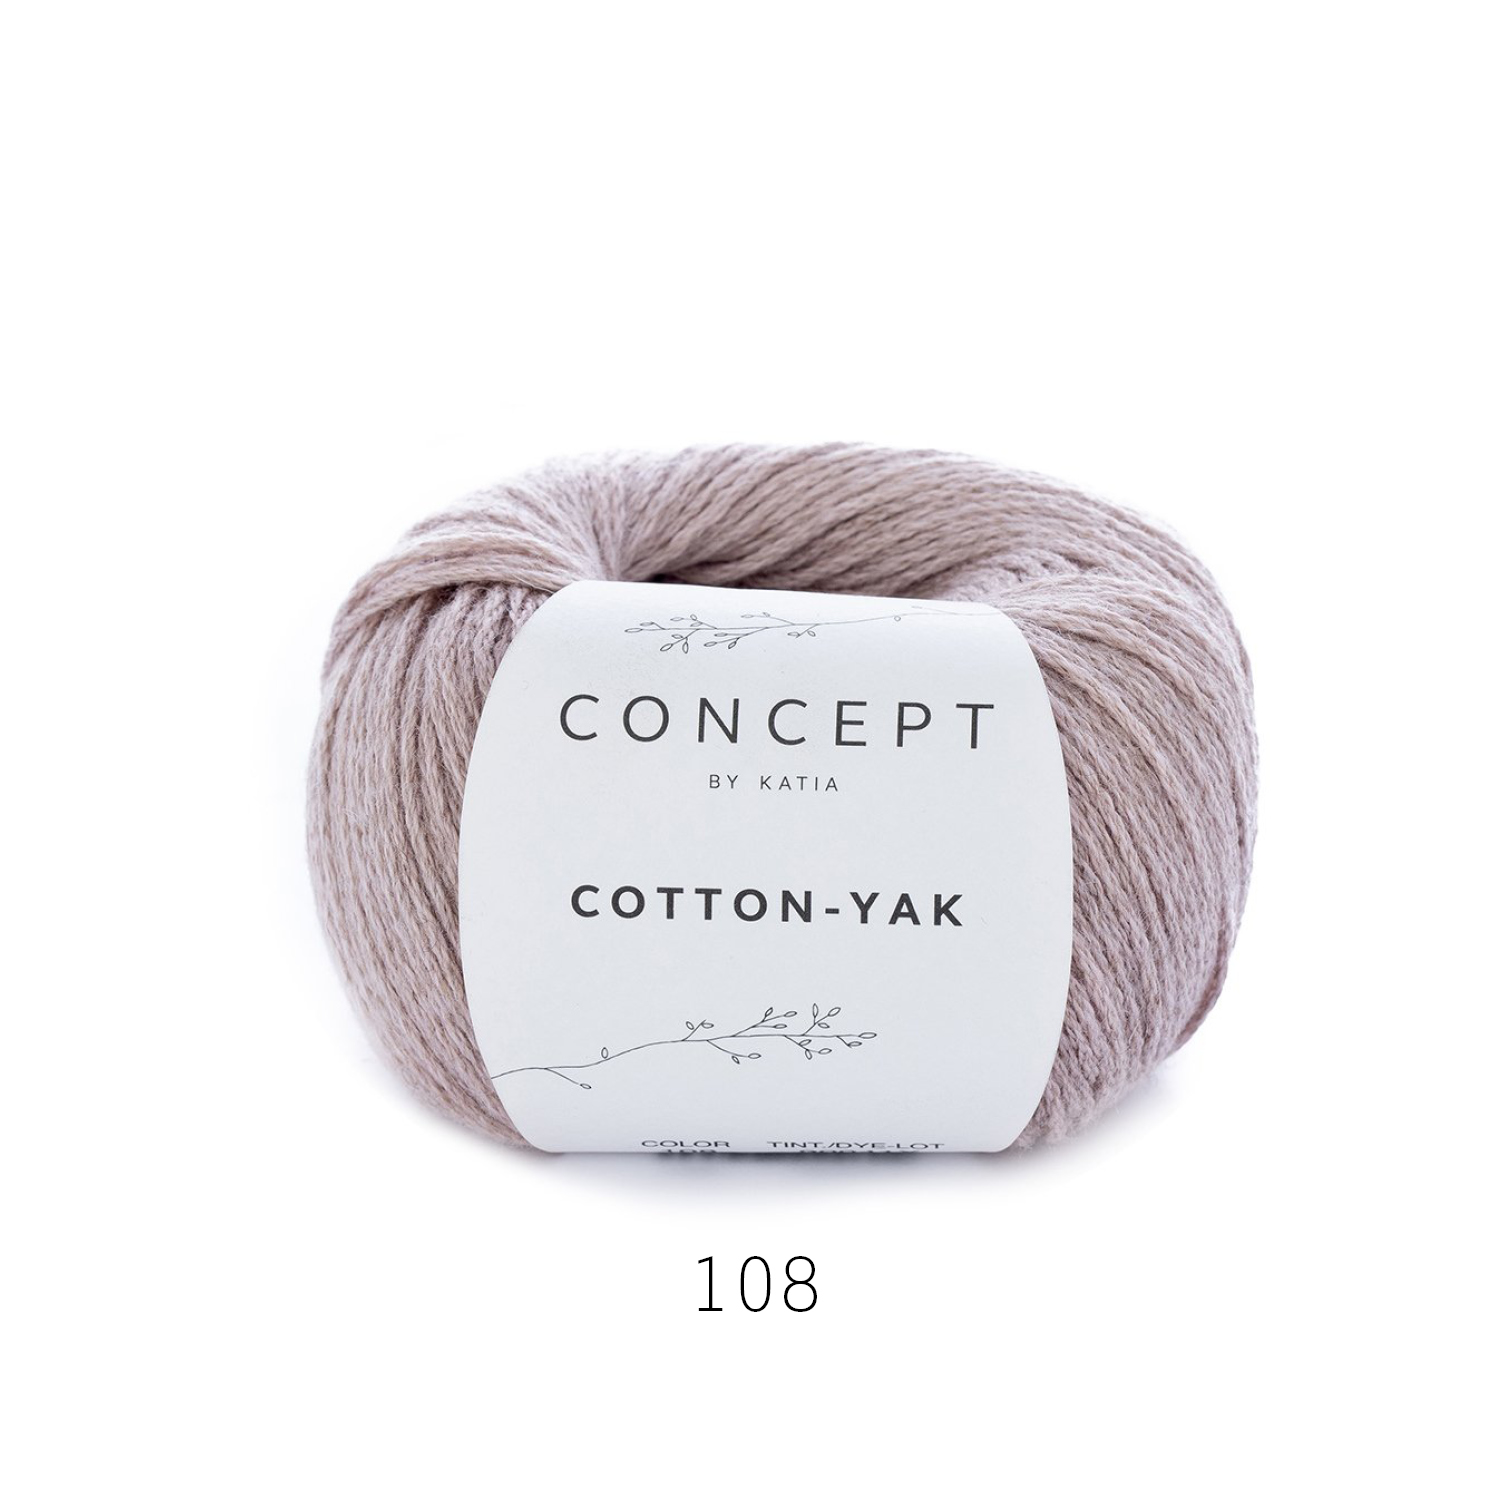 Cotton - Yak